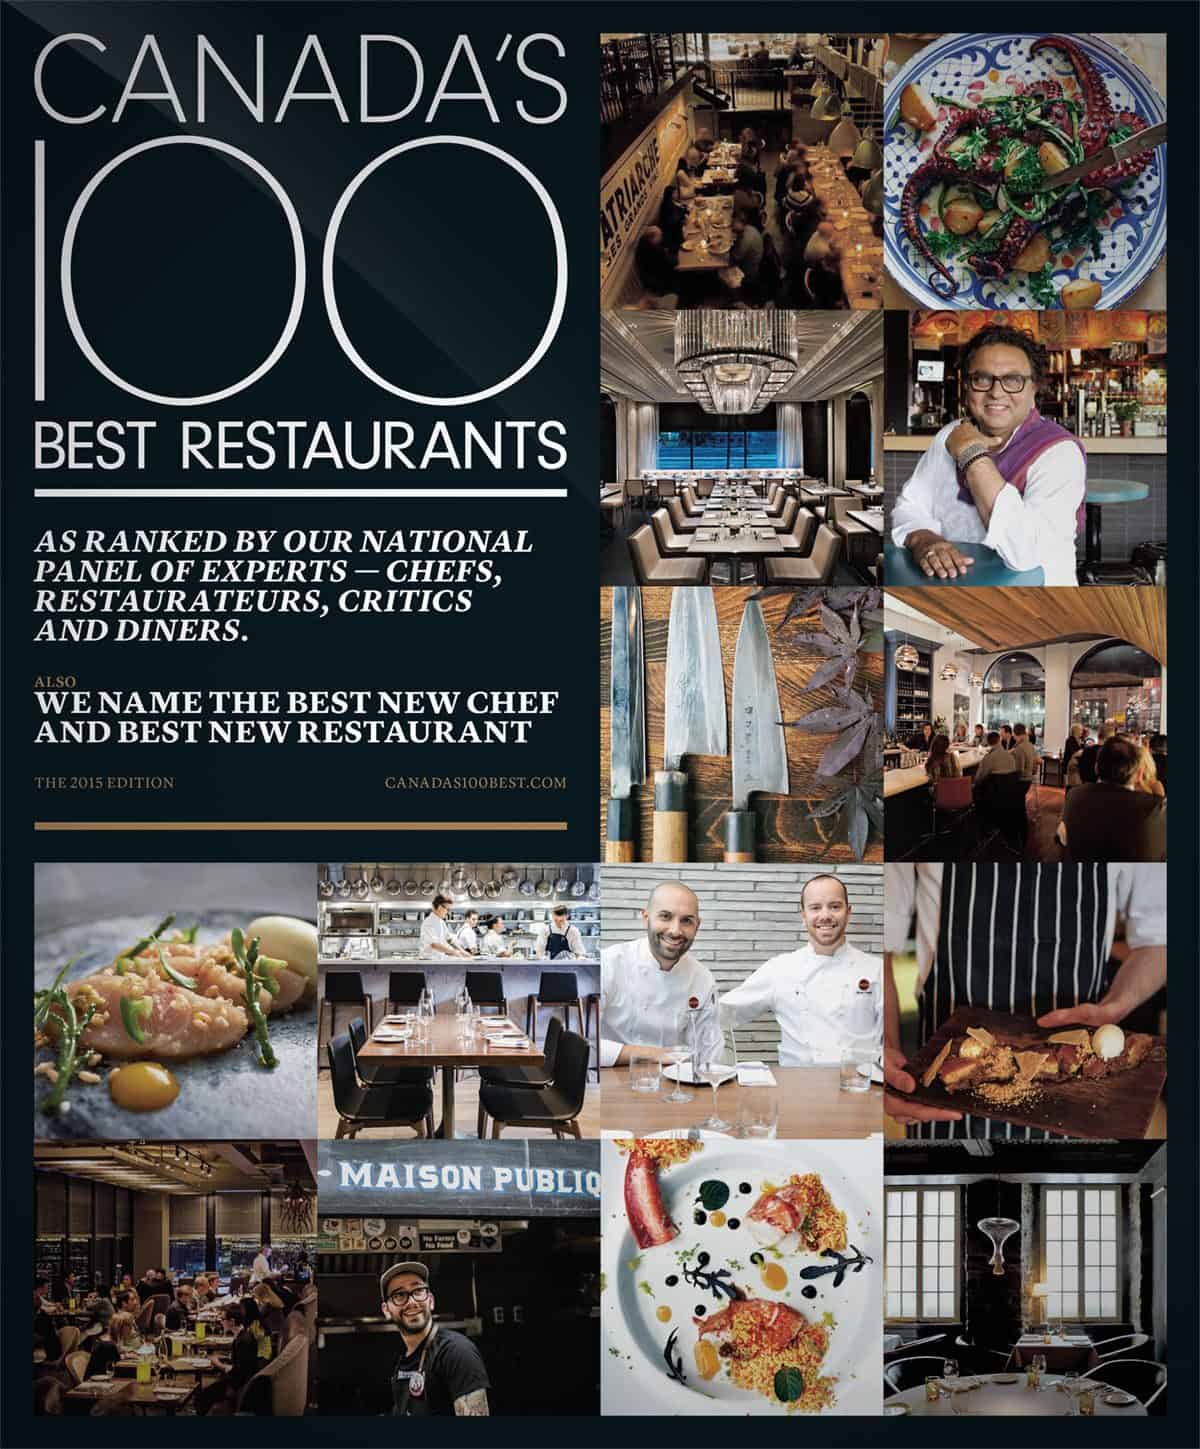 Risultati immagini per canada's 100 best restaurants 2015